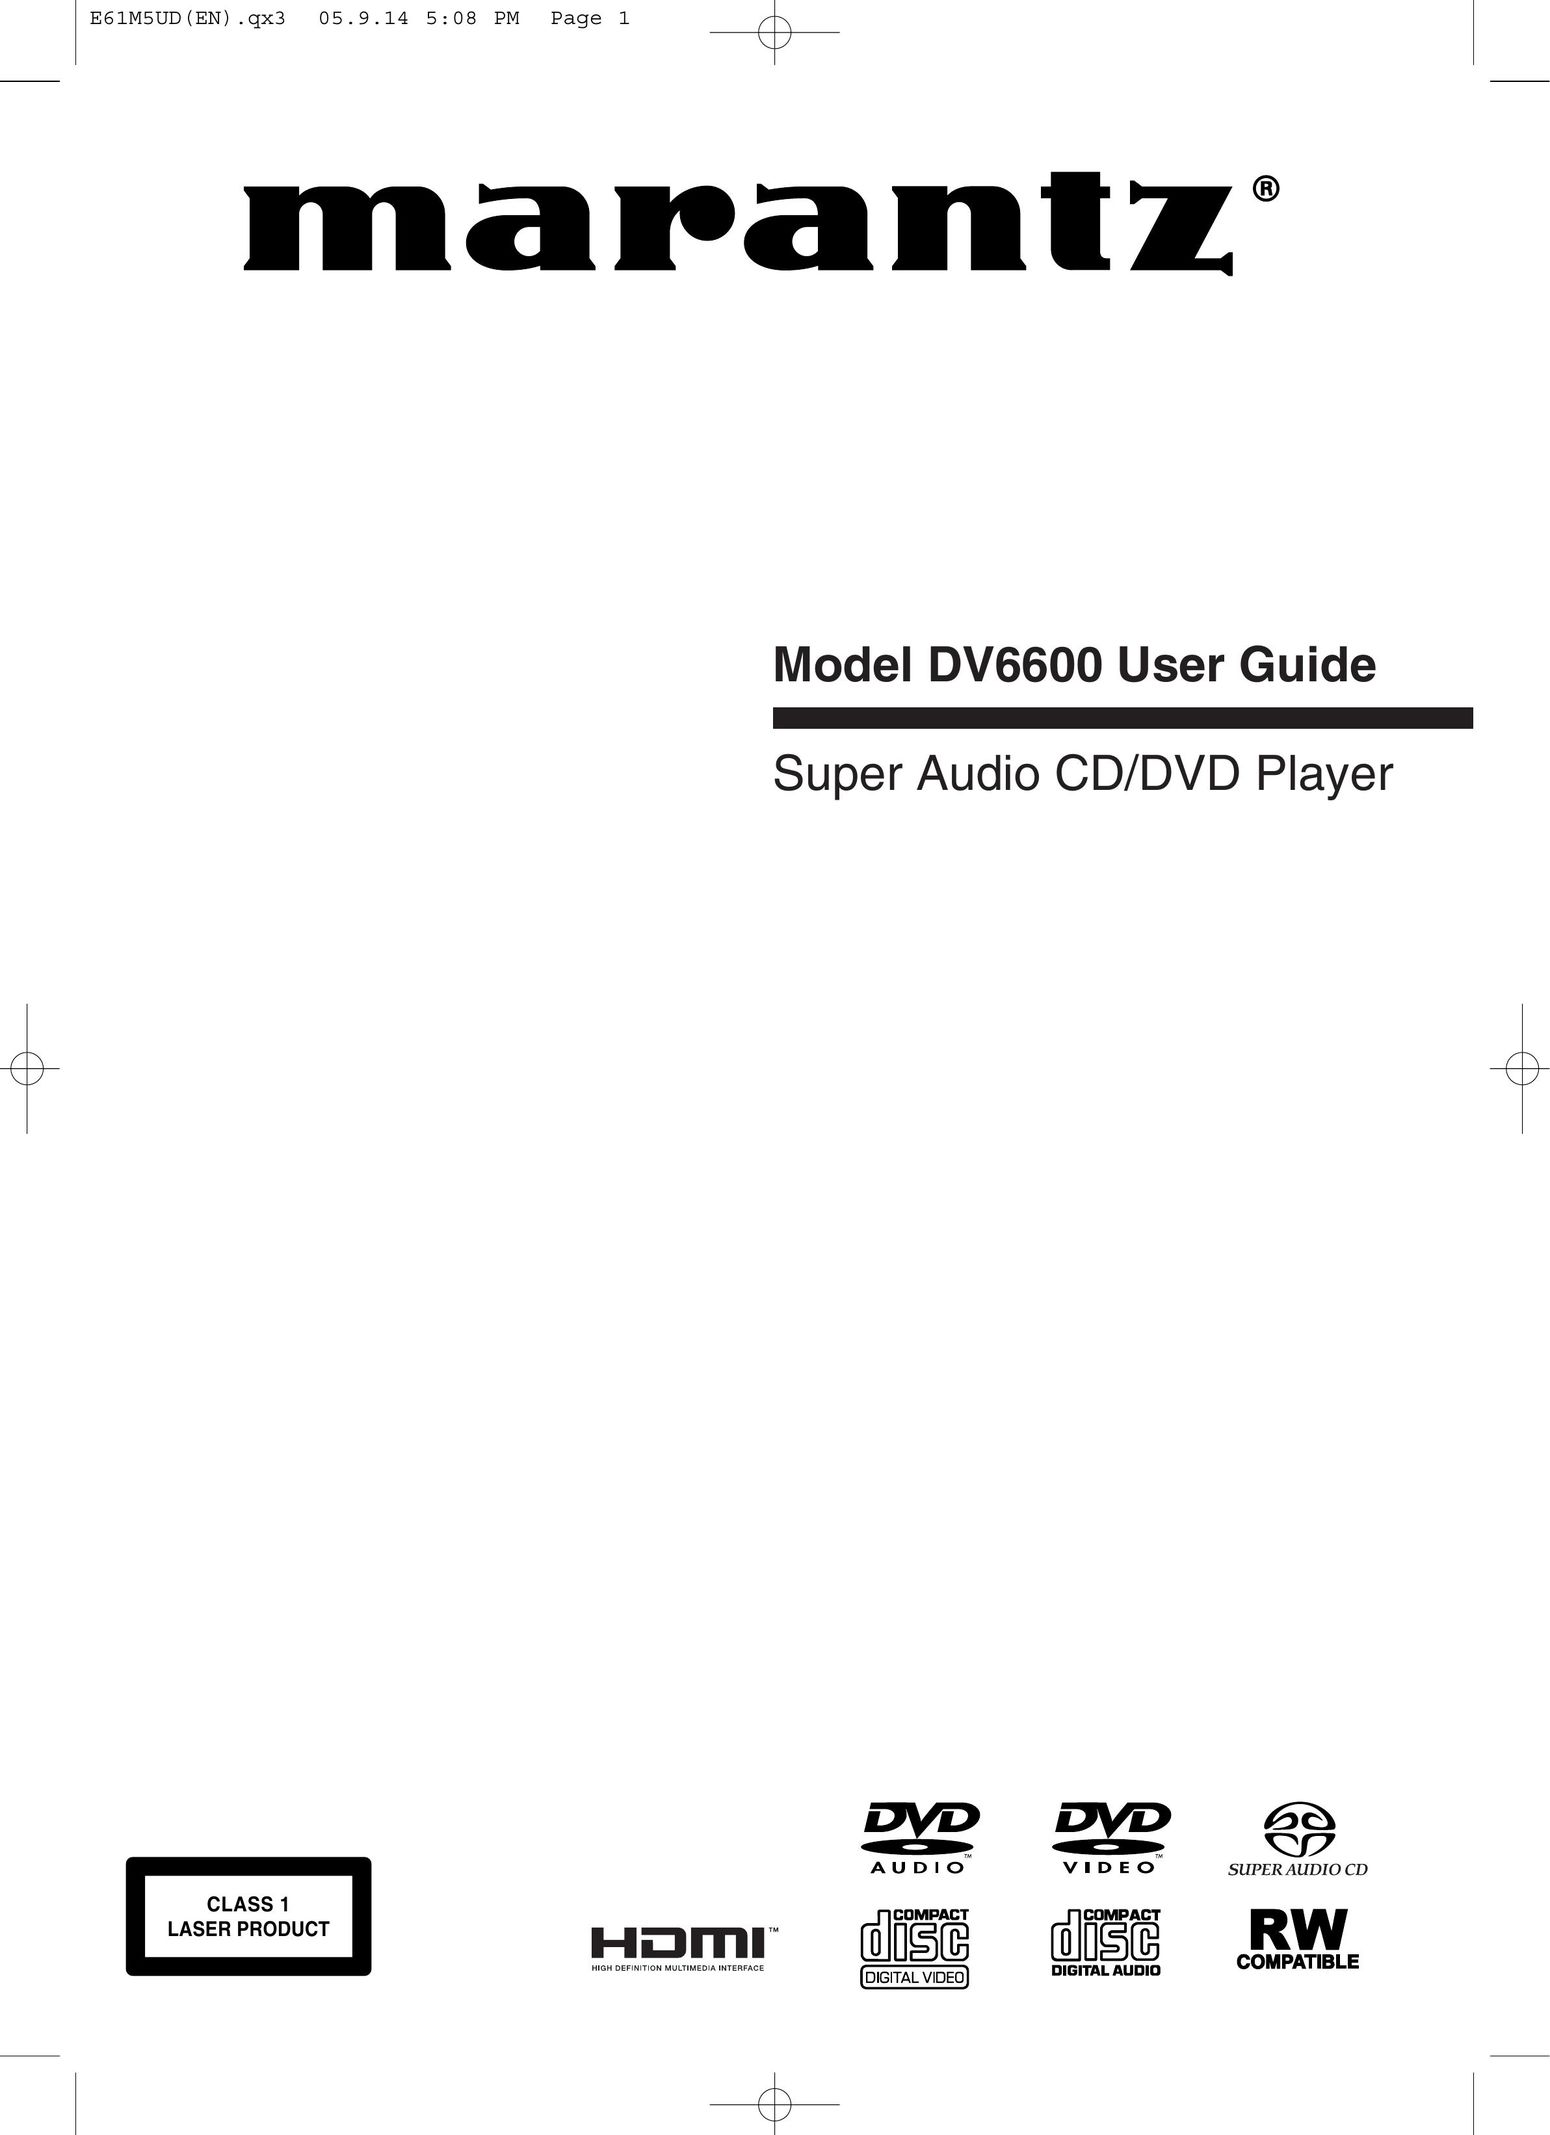 Marantz DV6600 DVD Player User Manual